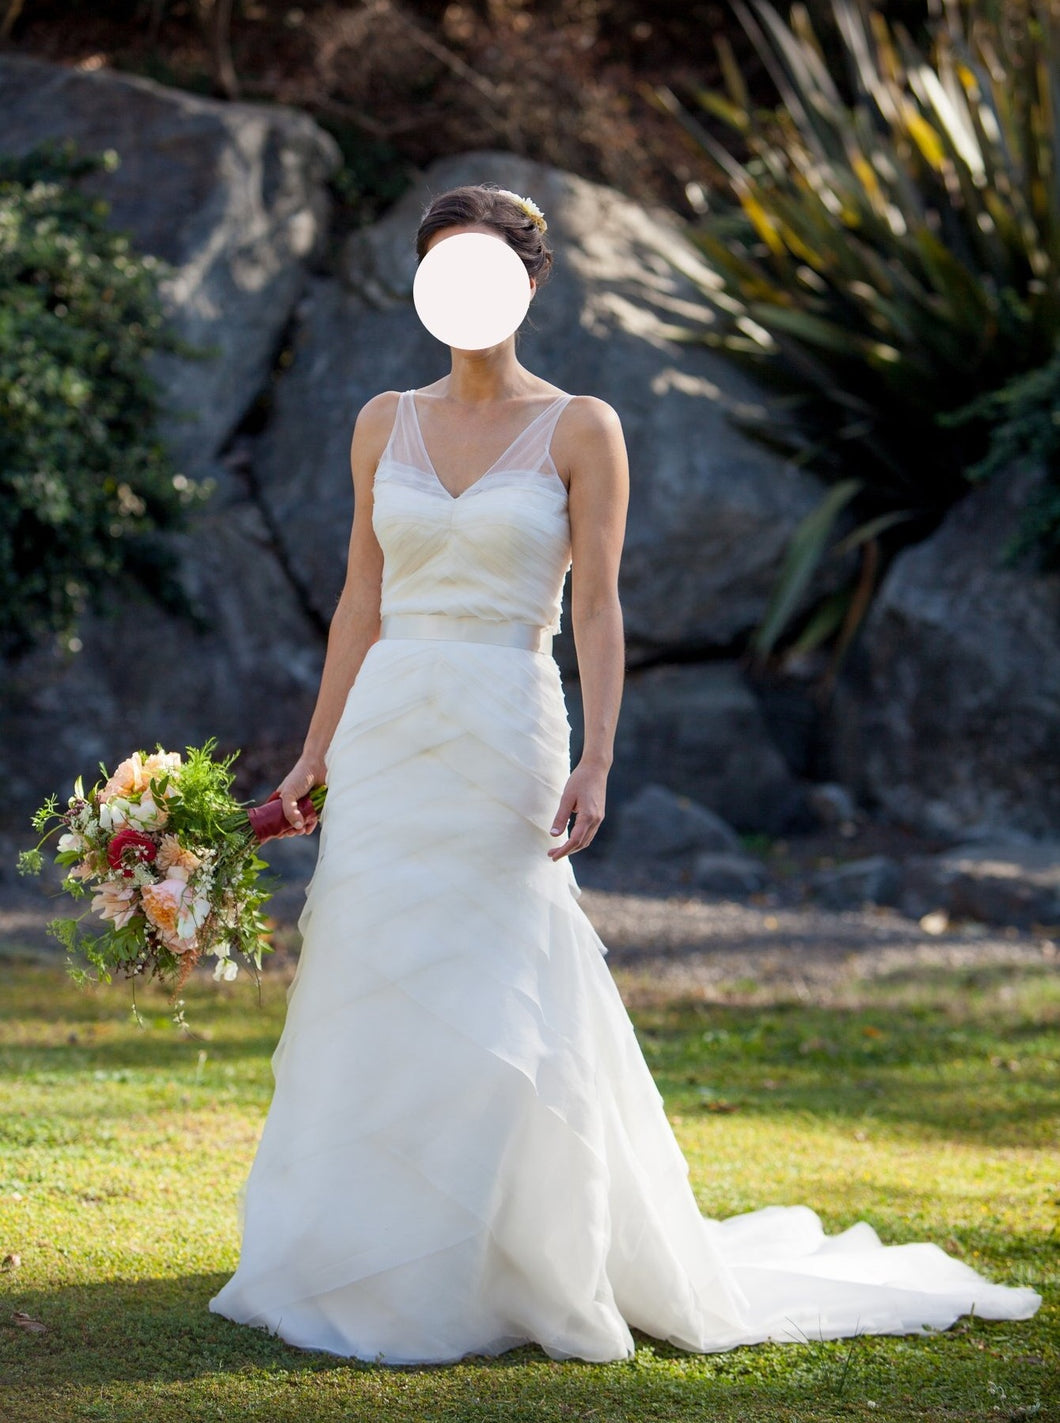 Anne Bowen 'N/A' wedding dress size-00 PREOWNED